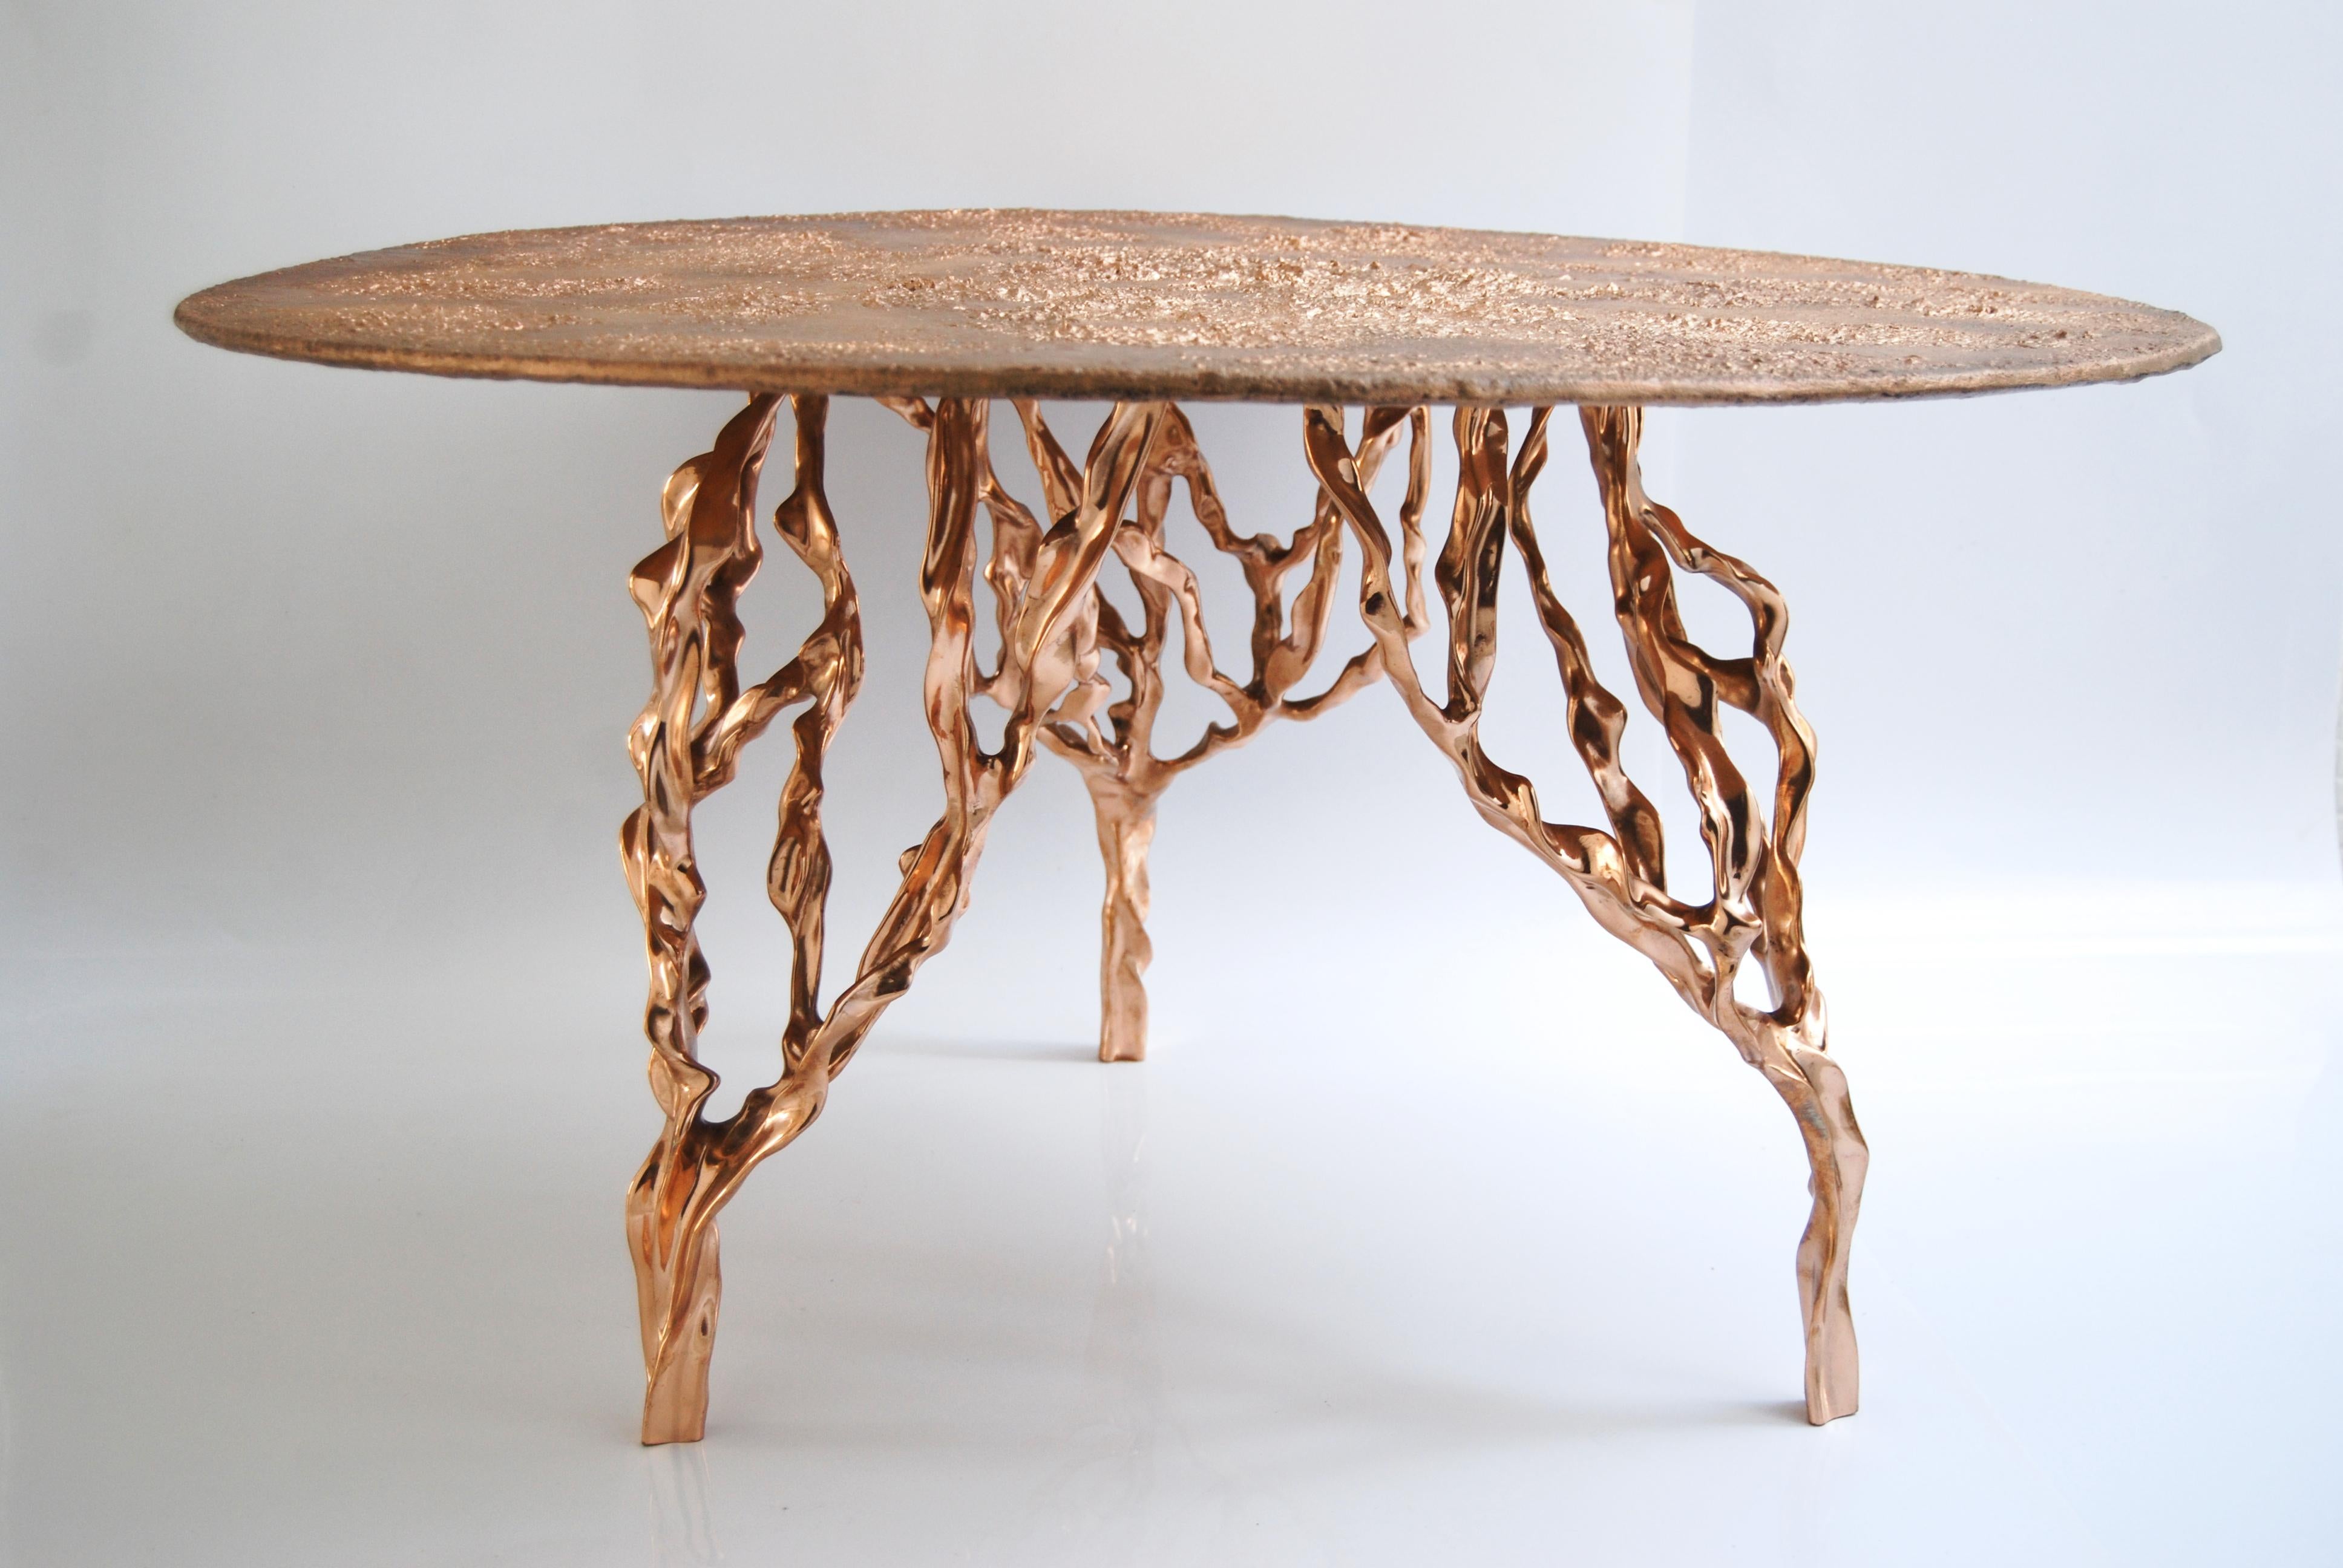 Table en bronze poli de FAKASAKA Design
Dimensions : L 84 x P 84 x H 46,5 cm
Matériaux : Bronze poli.

 